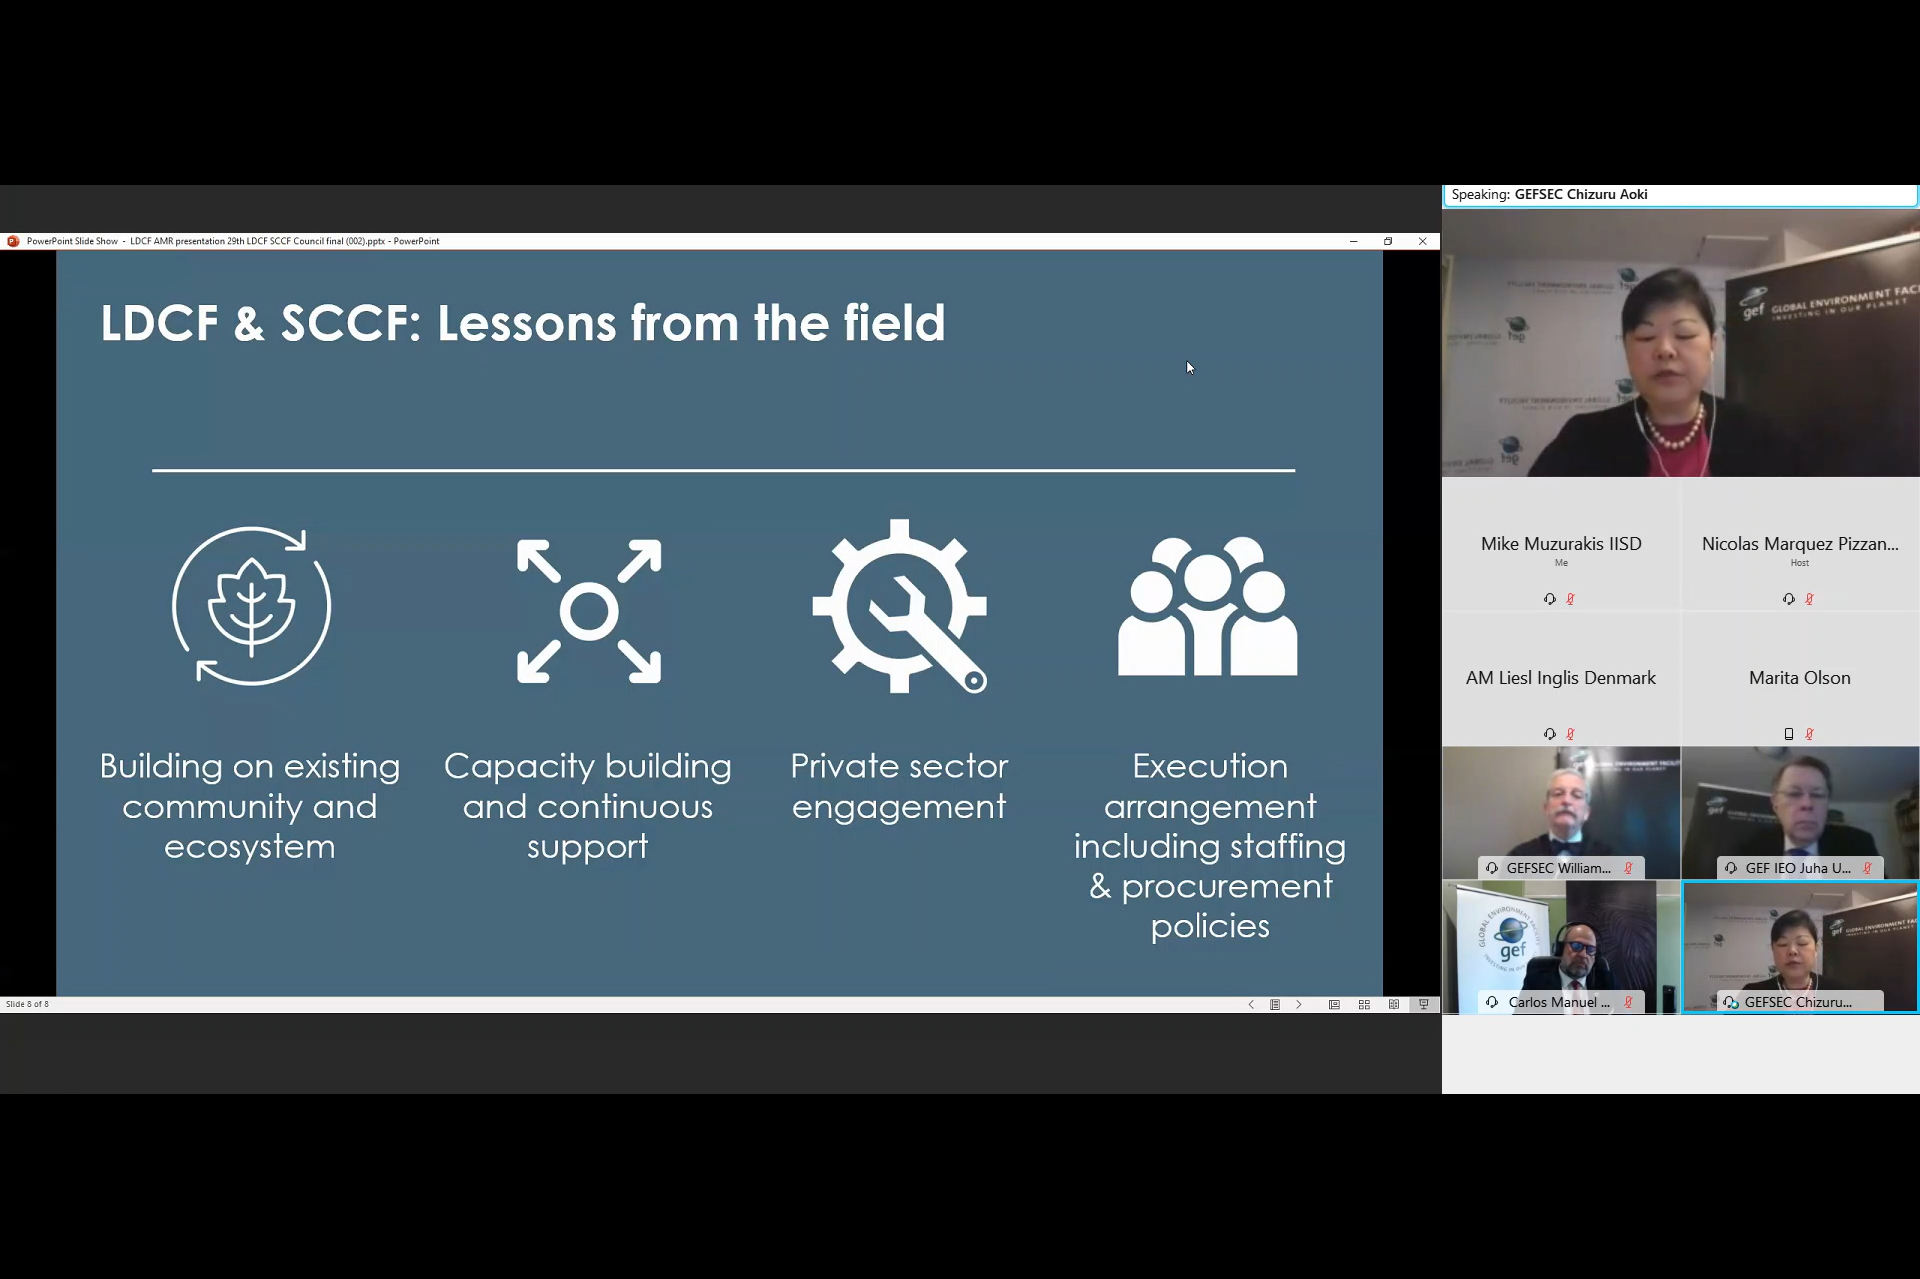 Chizuru Aoki, GEF Secretariat, presenting the Annual Monitoring Review of the LDCF and SCCF